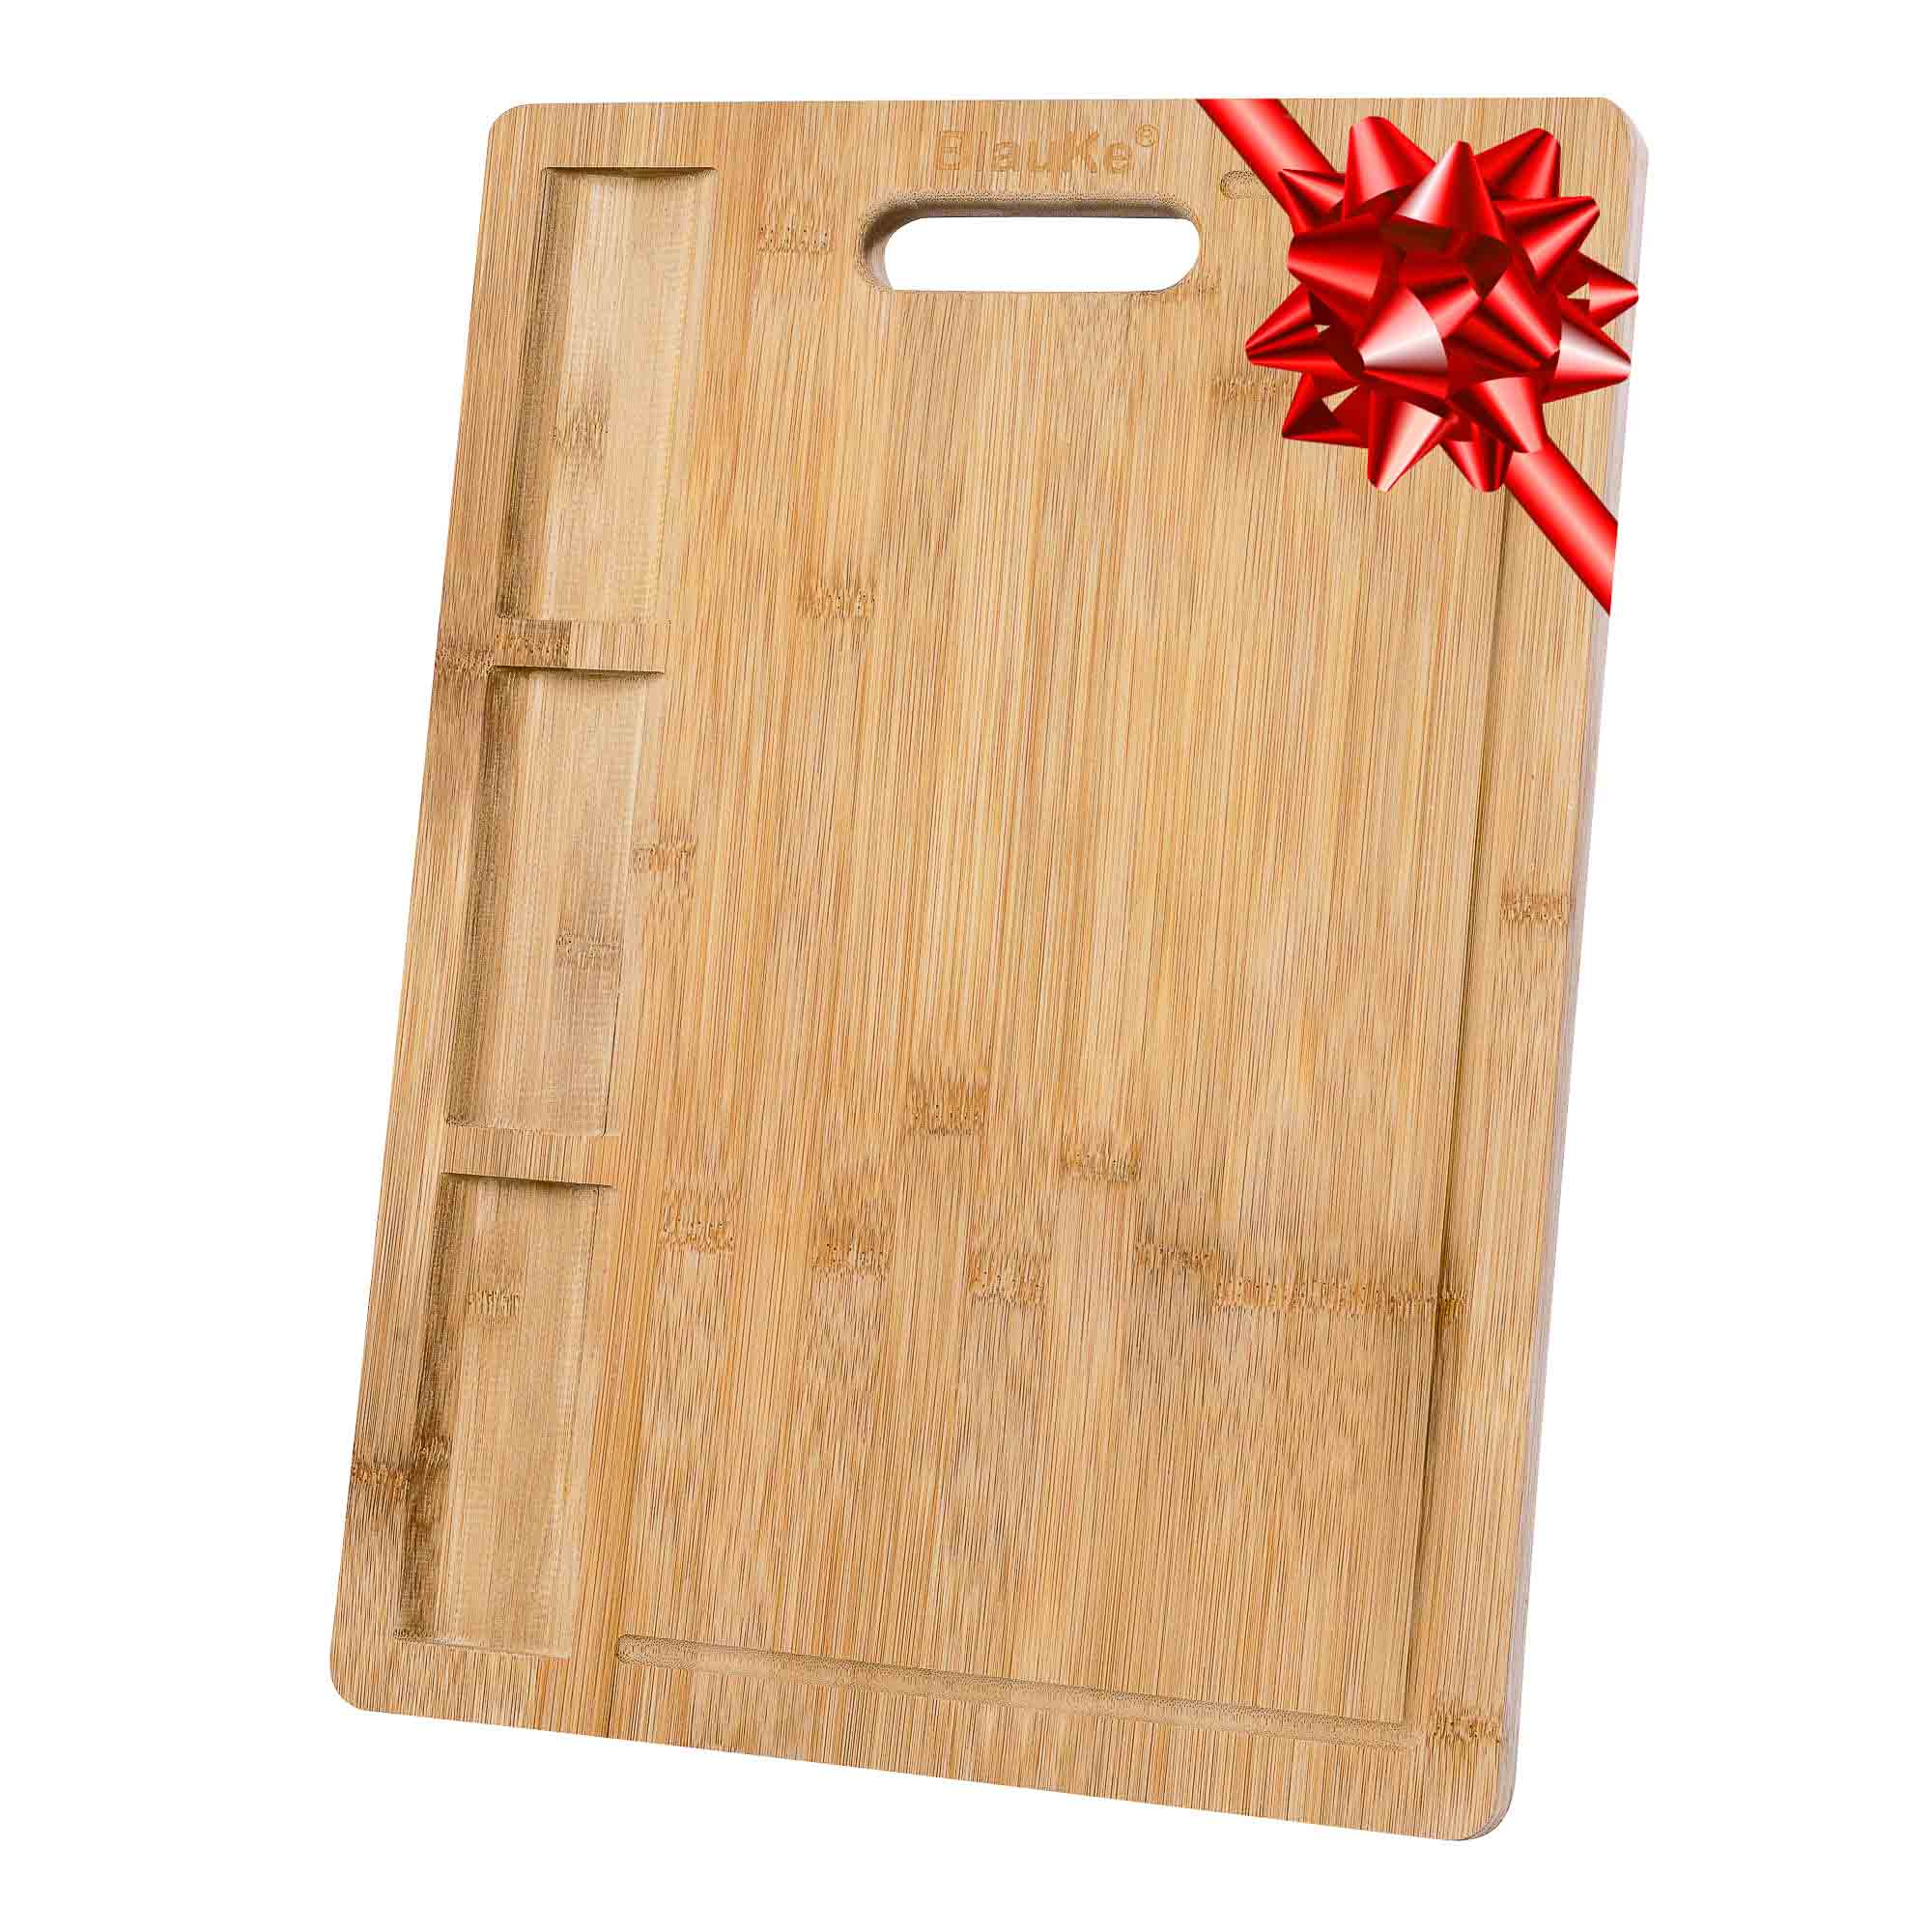 Extra Large Bamboo Cutting Board - 17x12.5 inch